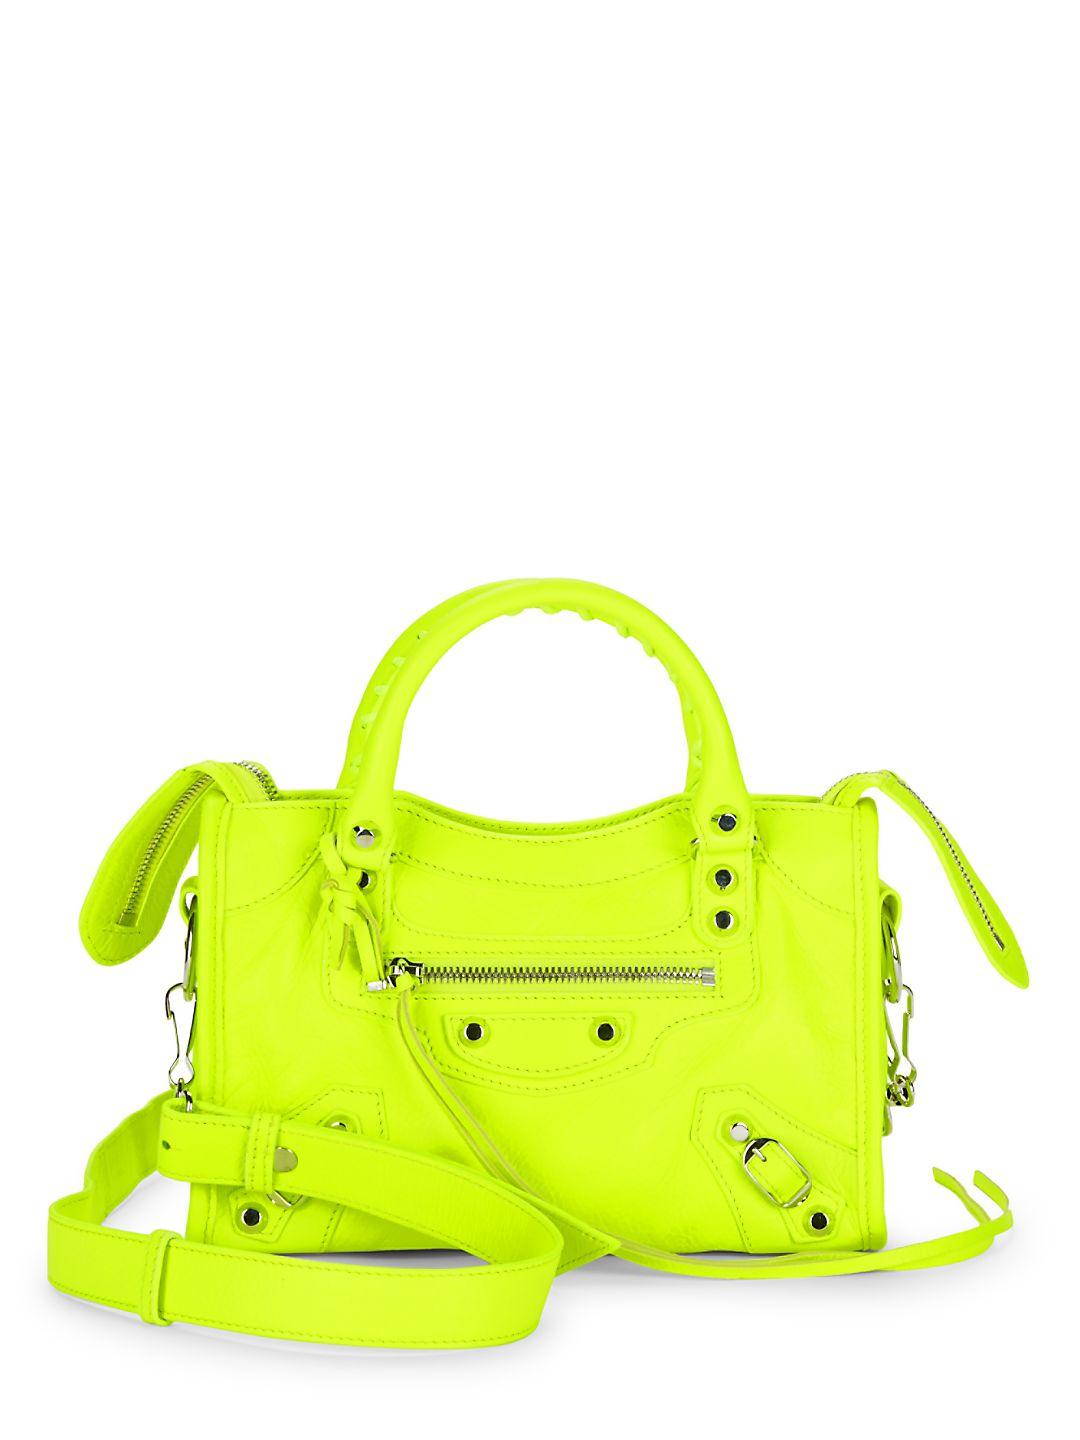 Balenciaga Neon Leather Bag | Lyst Canada